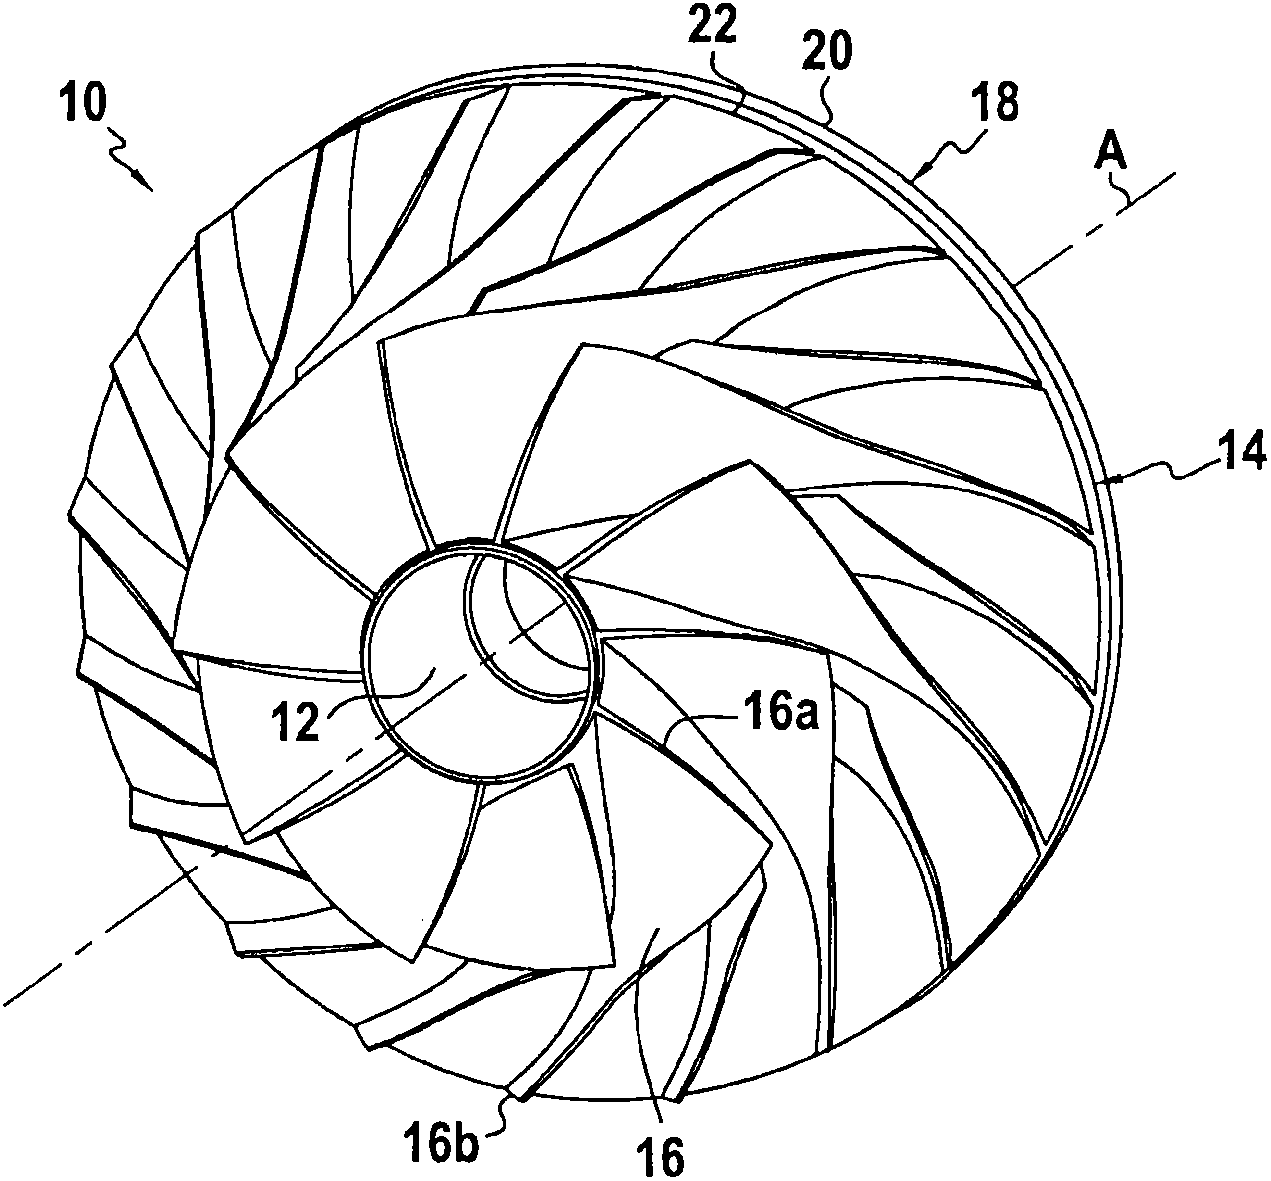 Erosion indicator for compressor wheel